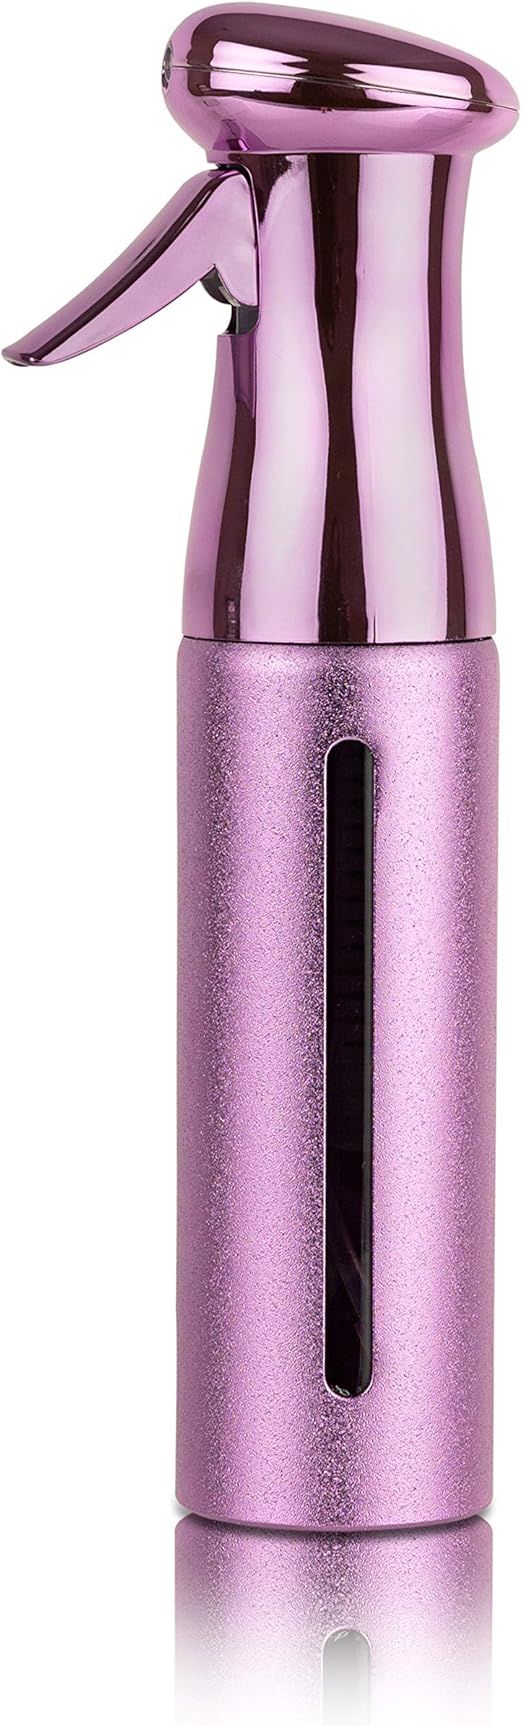 Salon Style Hair Spray Bottle (10oz) Patent – 360 Ultra Fine Water - Continuous Aerosol Free Tr... | Amazon (US)